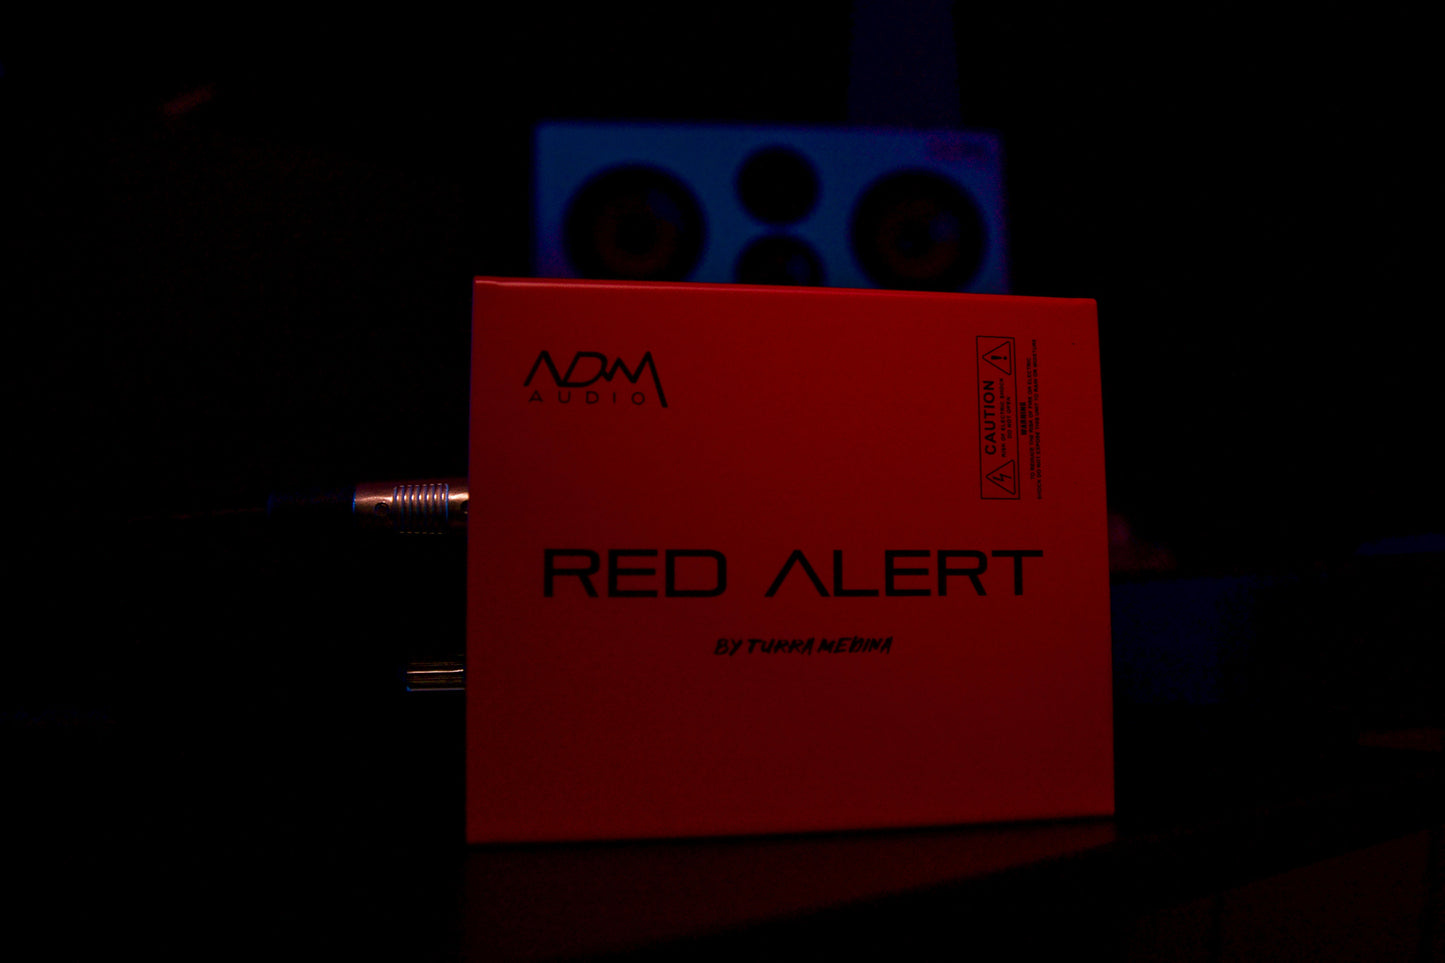 NDM Audio x Turra Medina "Red Alert"